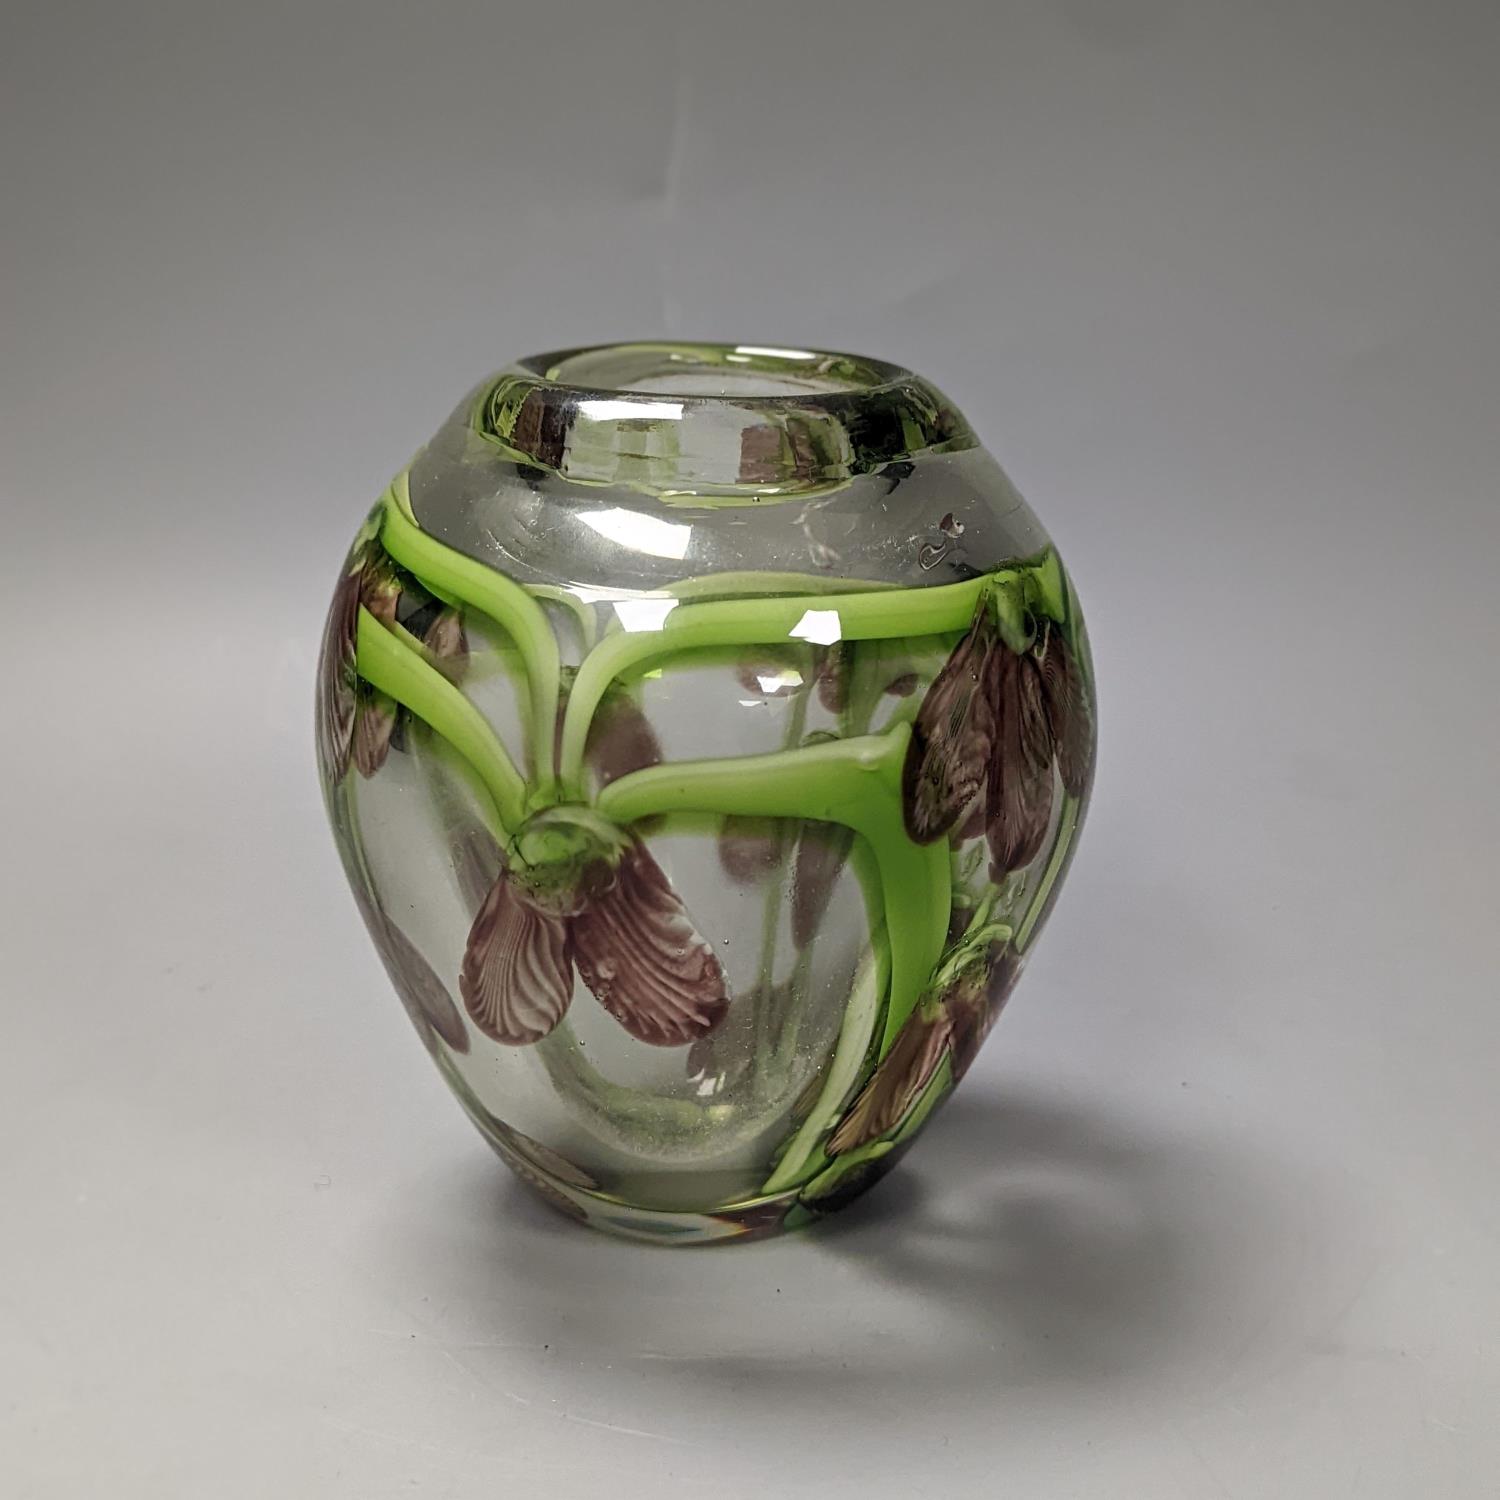 An Art glass lamp work vase 13.5cm